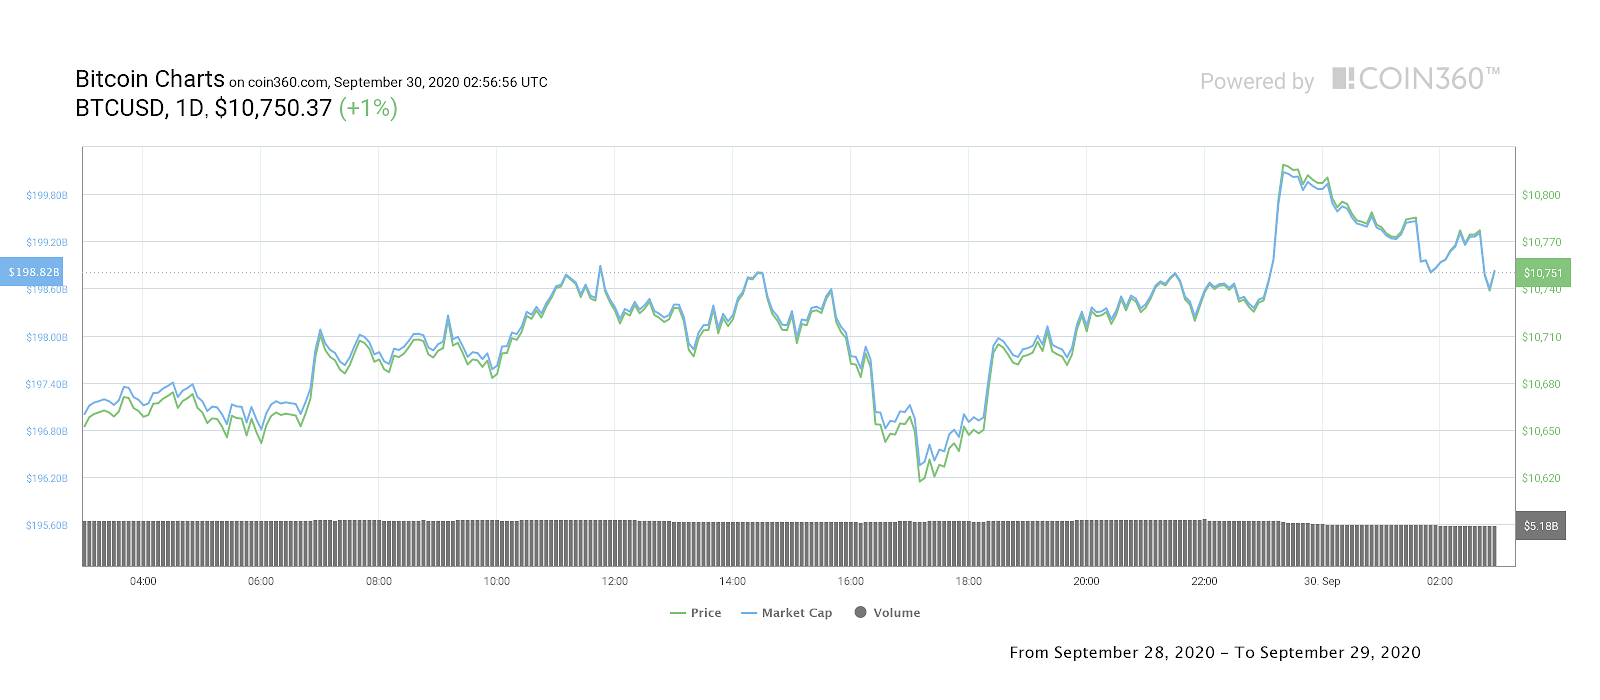 Bitcoin price daily performance